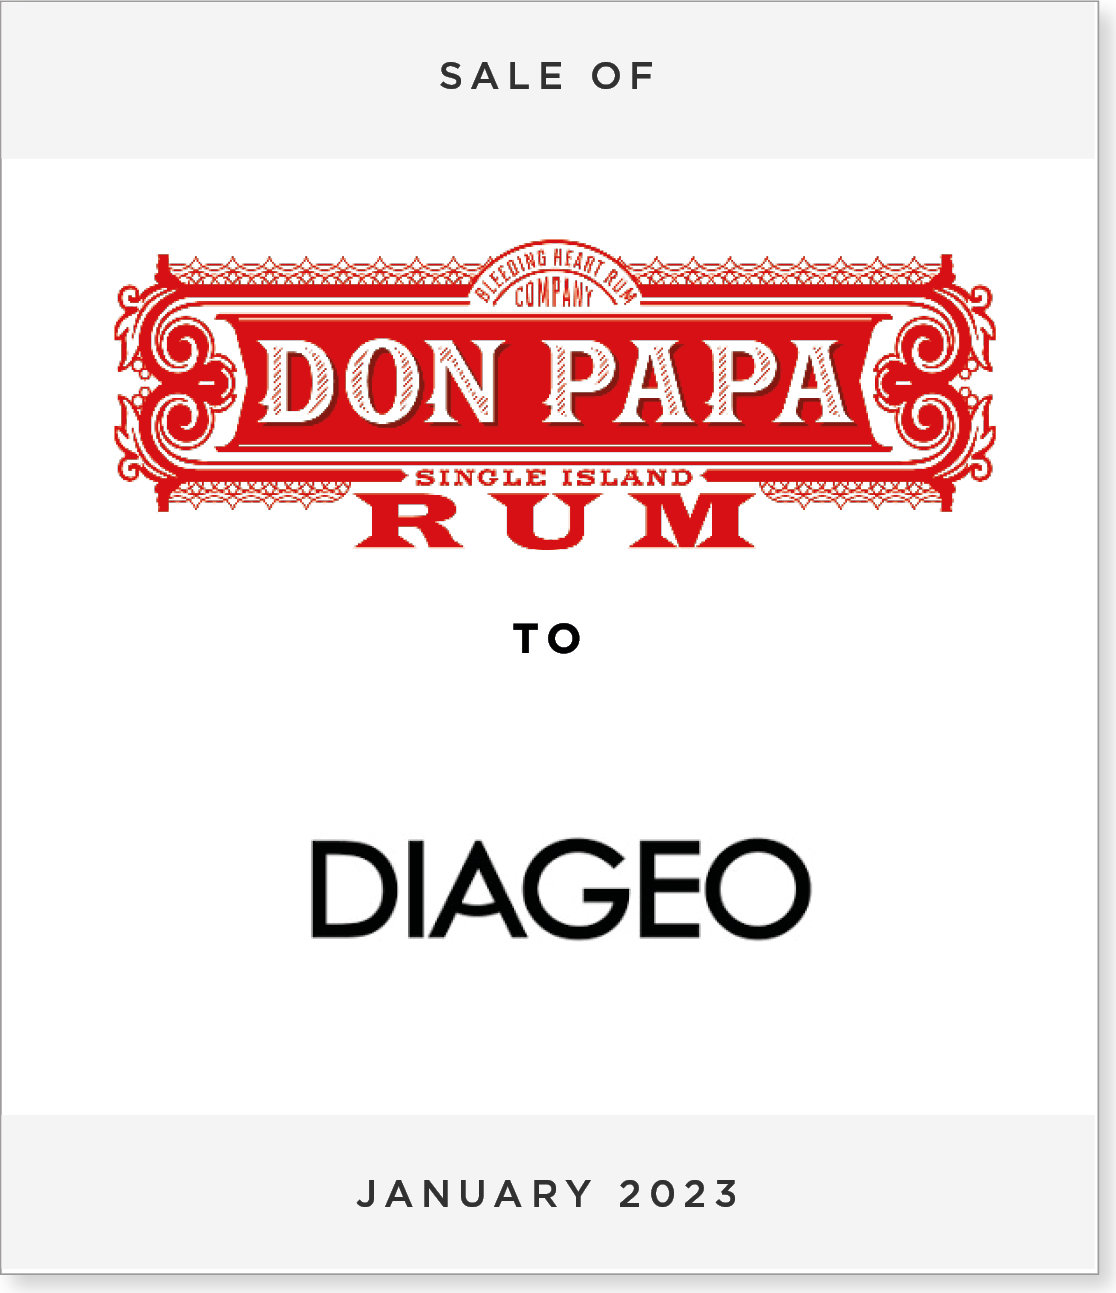 DonPapa_Diageo International